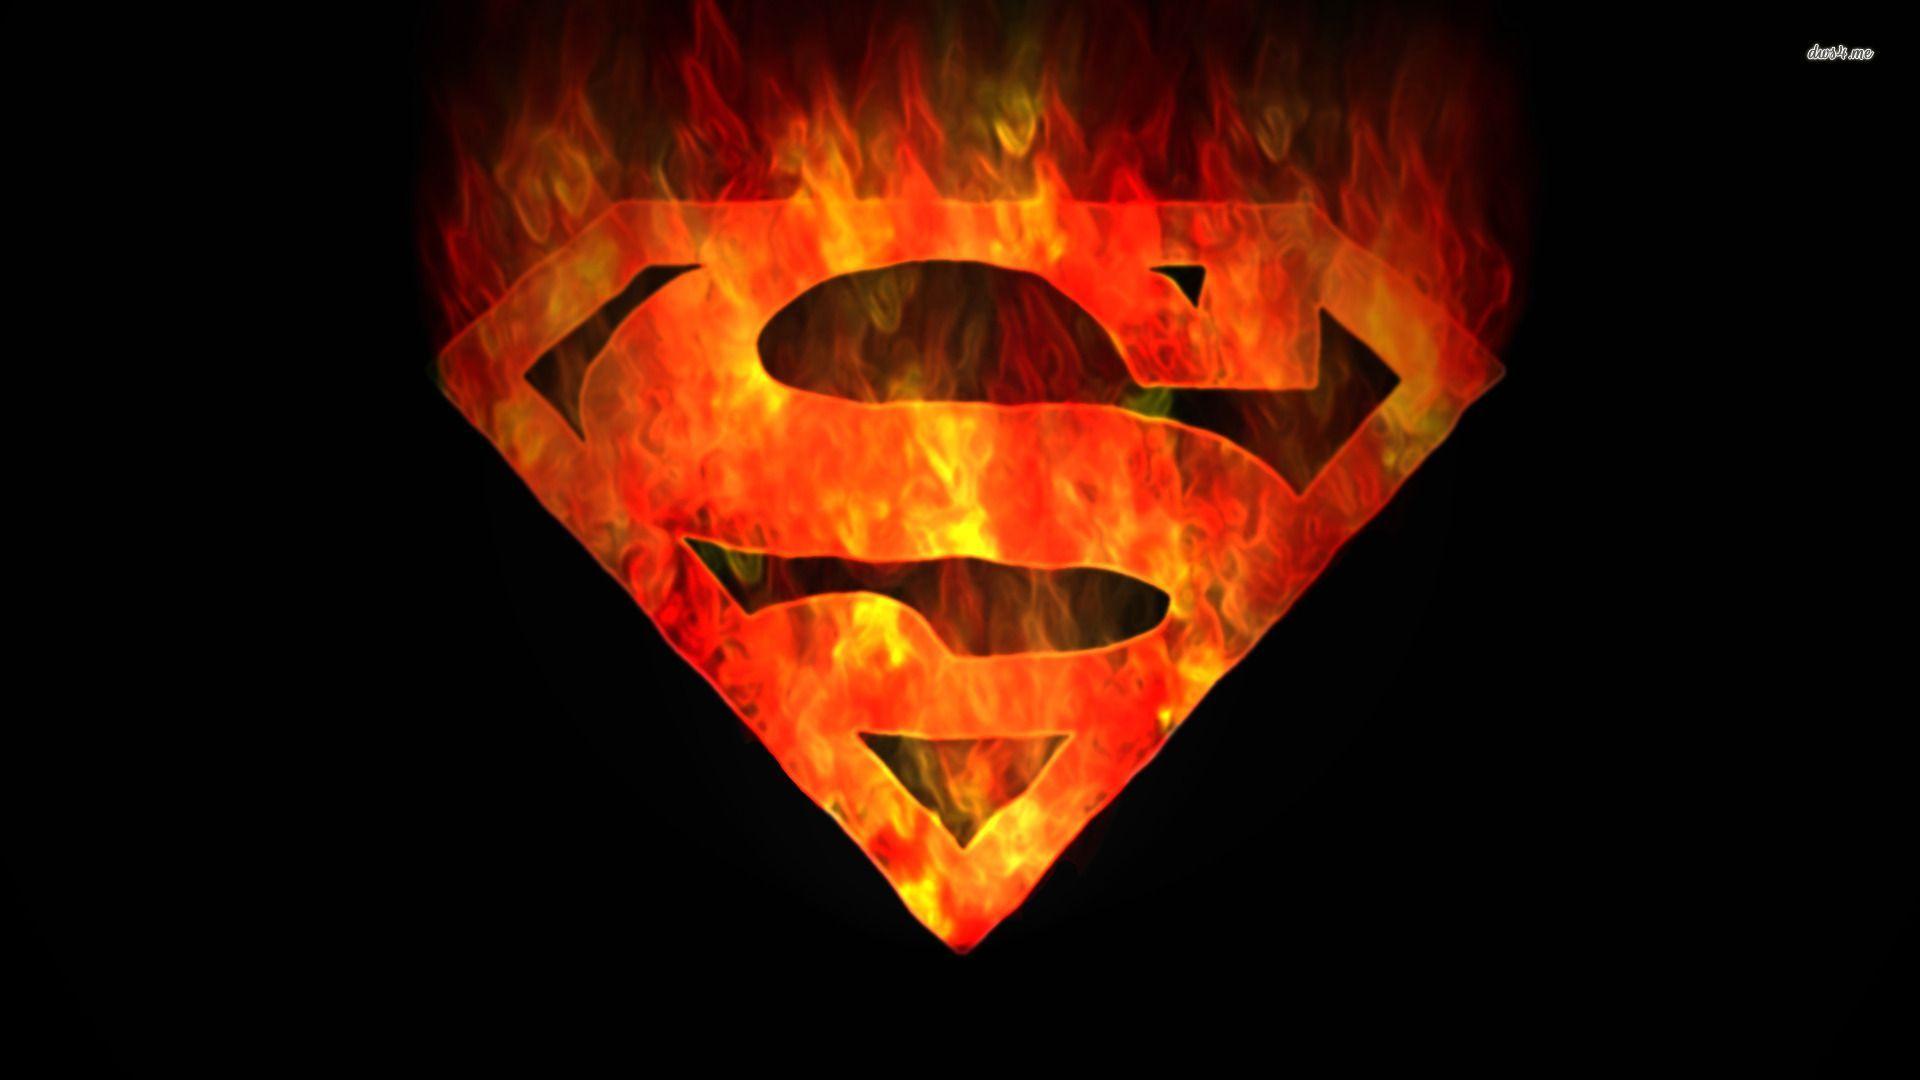 Superman Logo Background